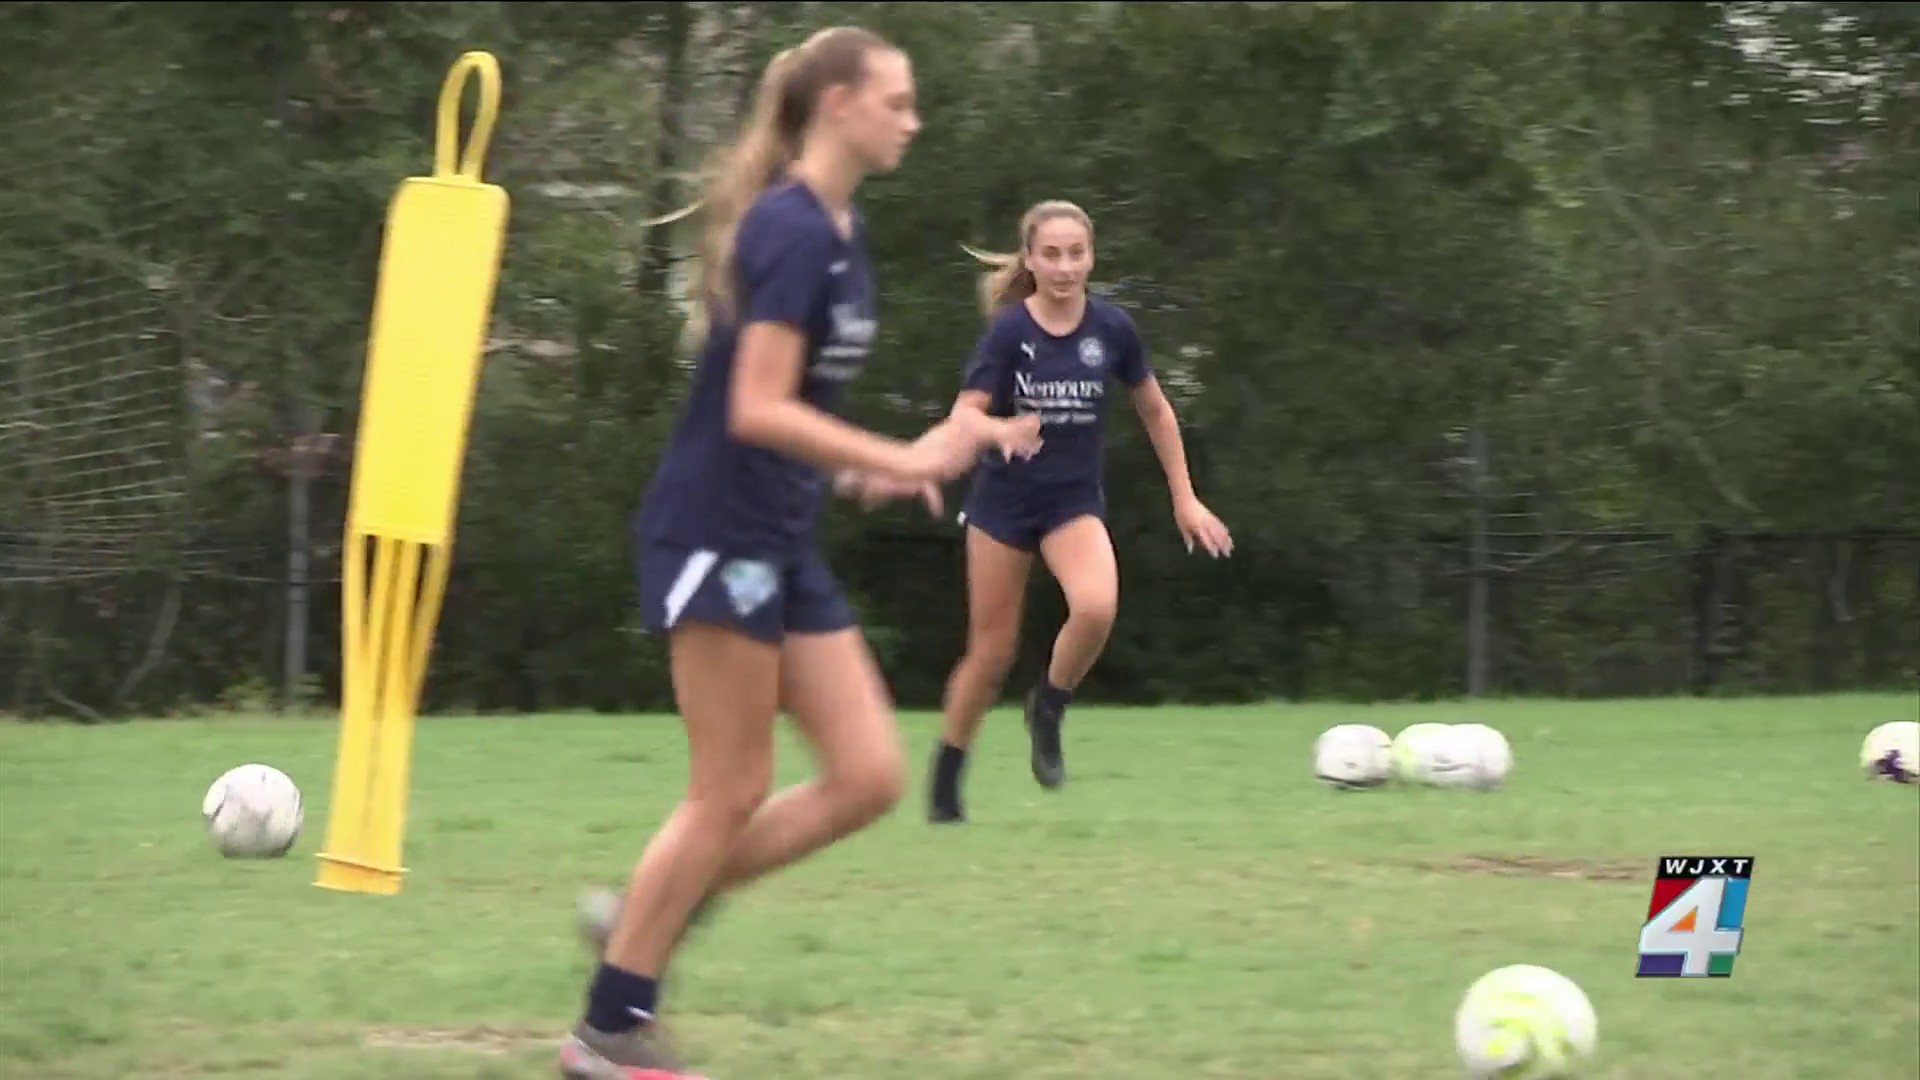 Jacksonville Fc Girls U14 Soccer Team Wins In Pks Advances To Ecnl National Finals